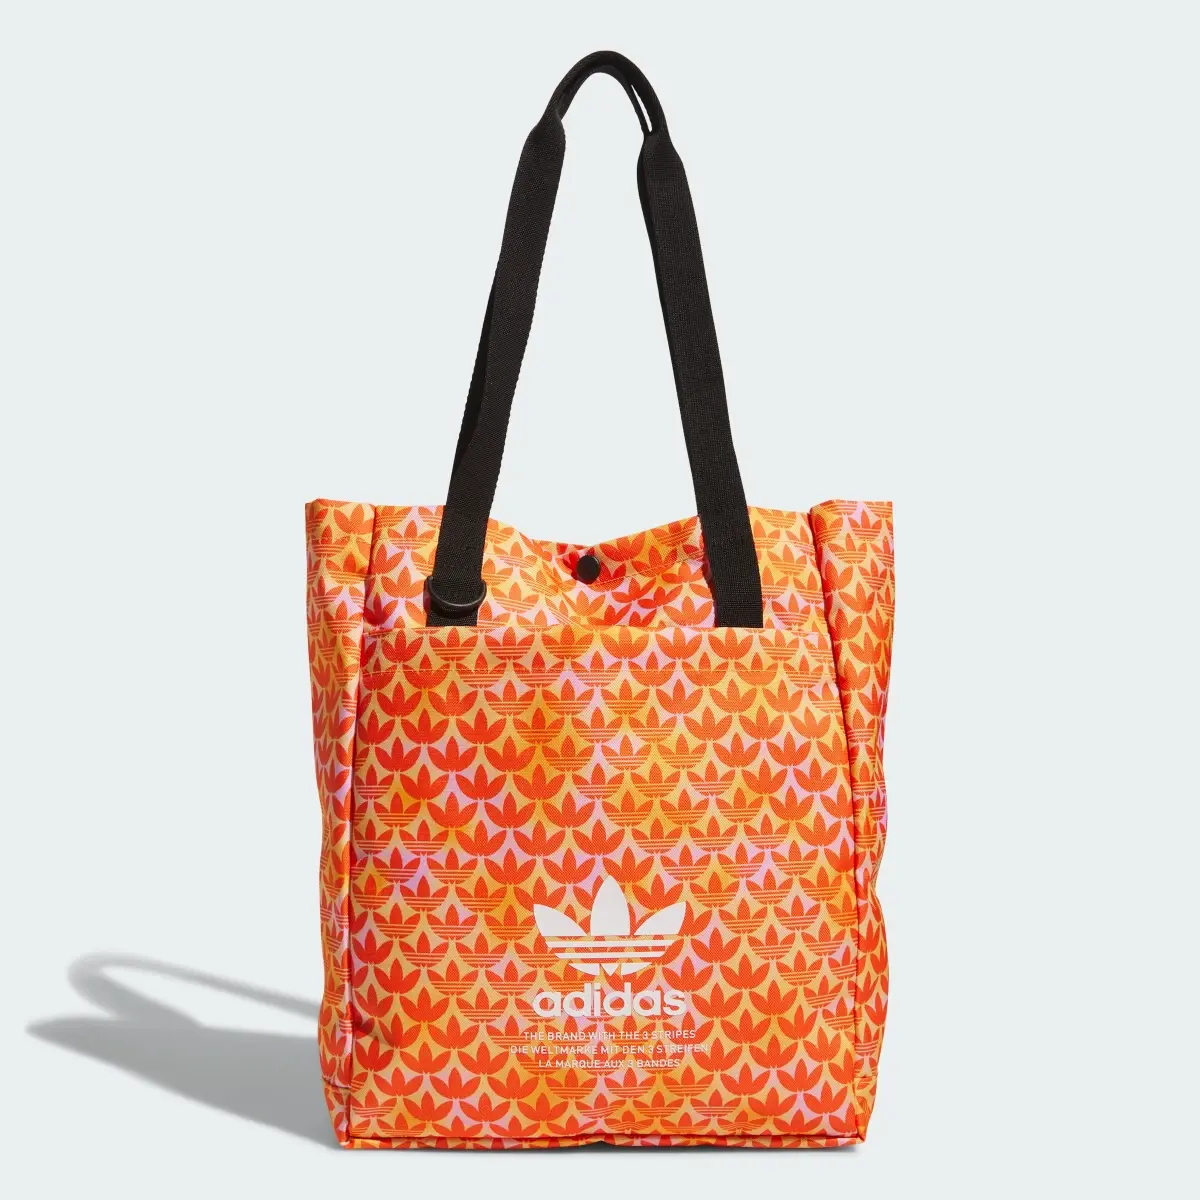 Adidas Simple Tote Bag. 1